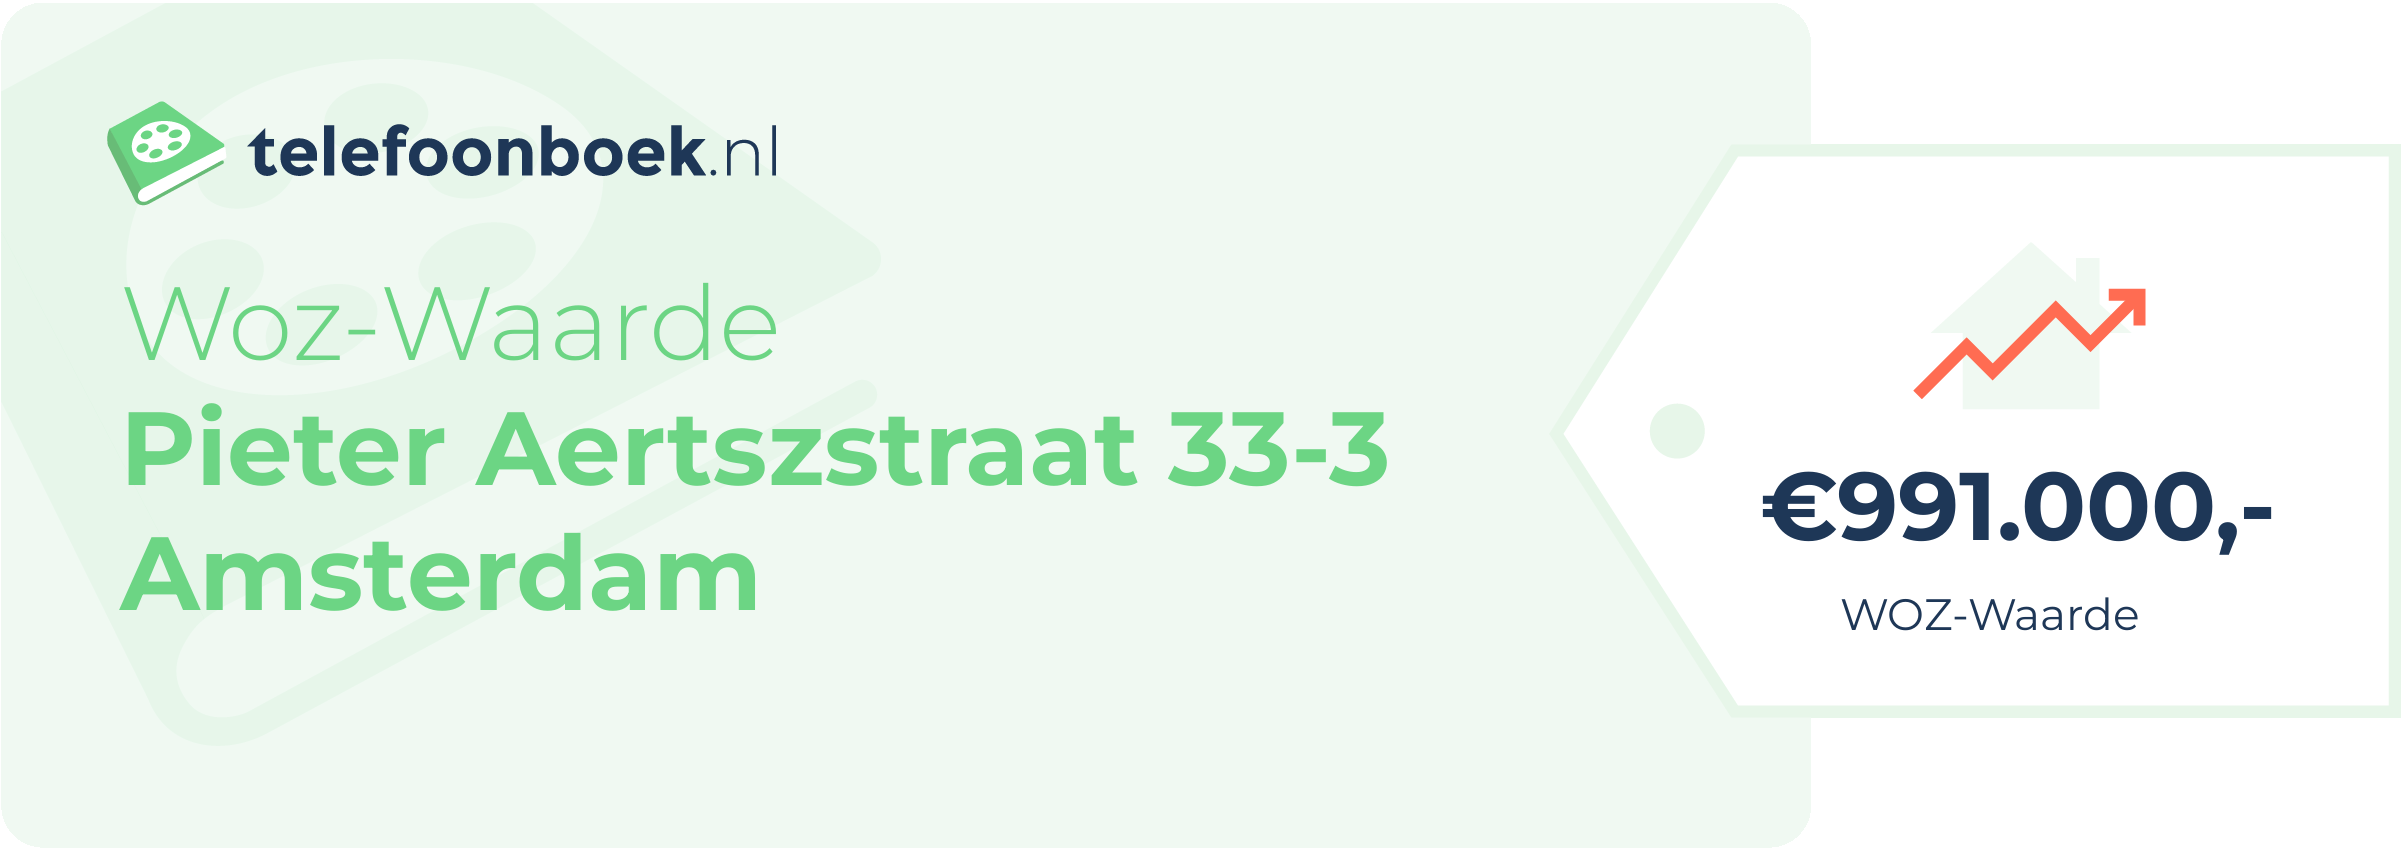 WOZ-waarde Pieter Aertszstraat 33-3 Amsterdam